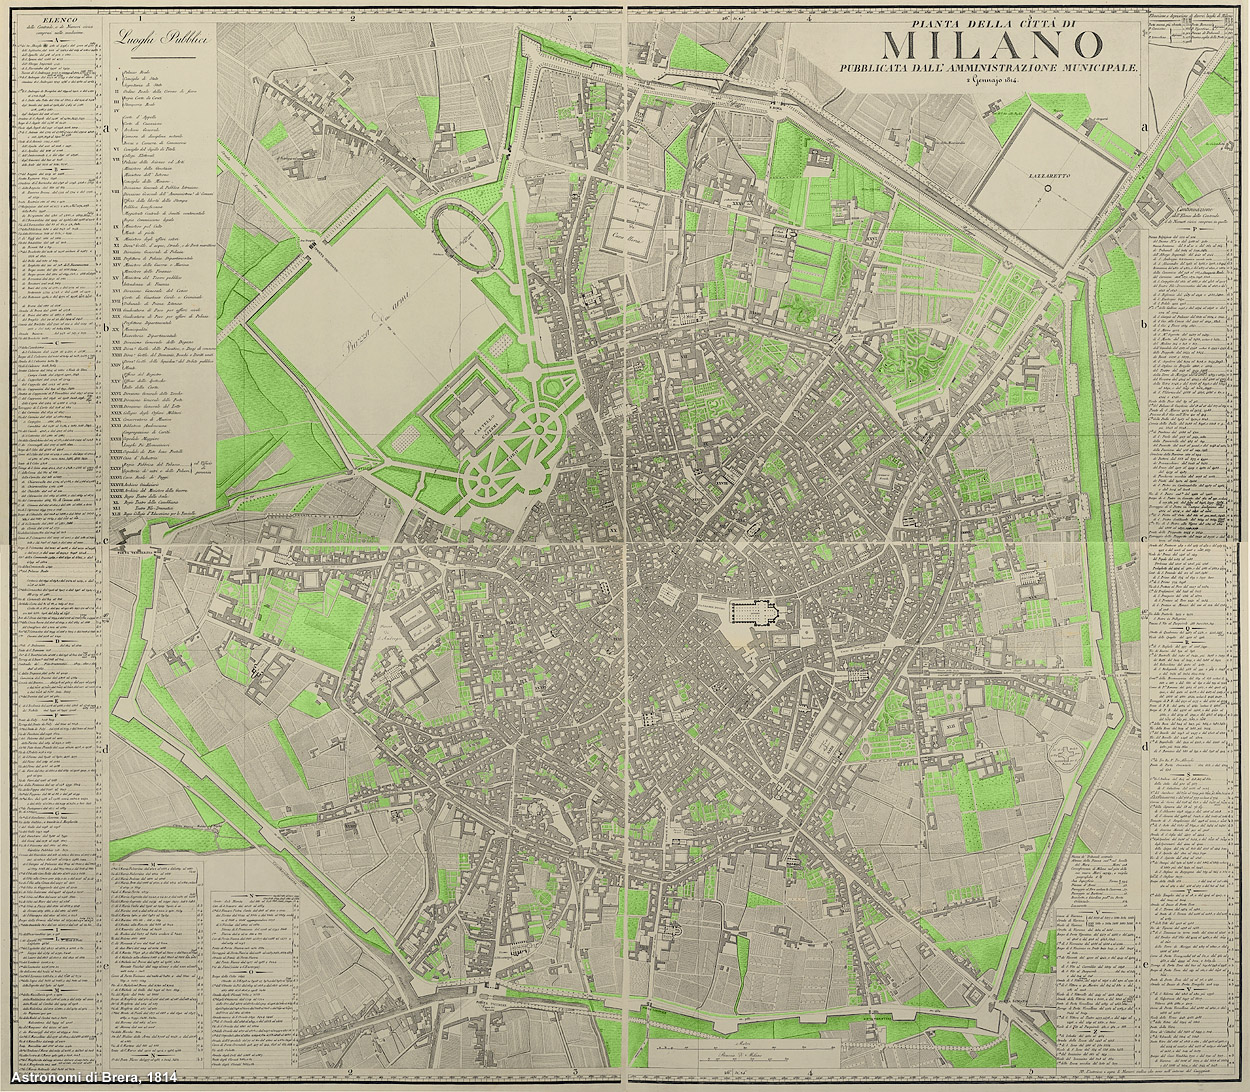 Milano 1814 Prati e giardini